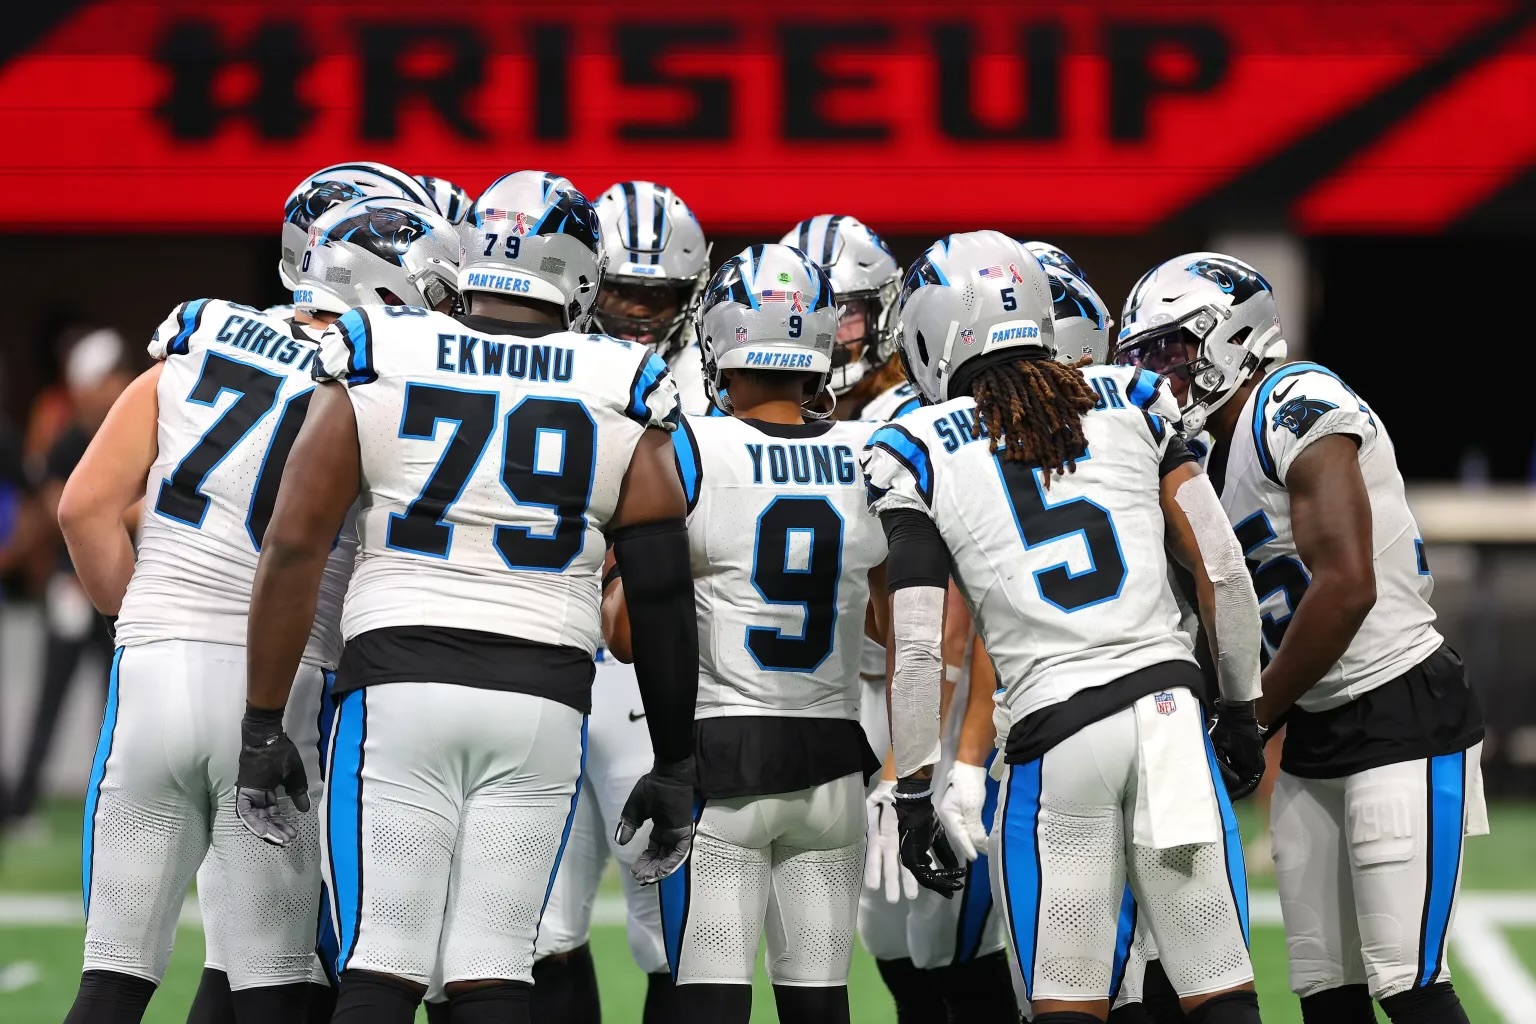 NFL: Saints-Panthers will debut new Monday Night Football theme